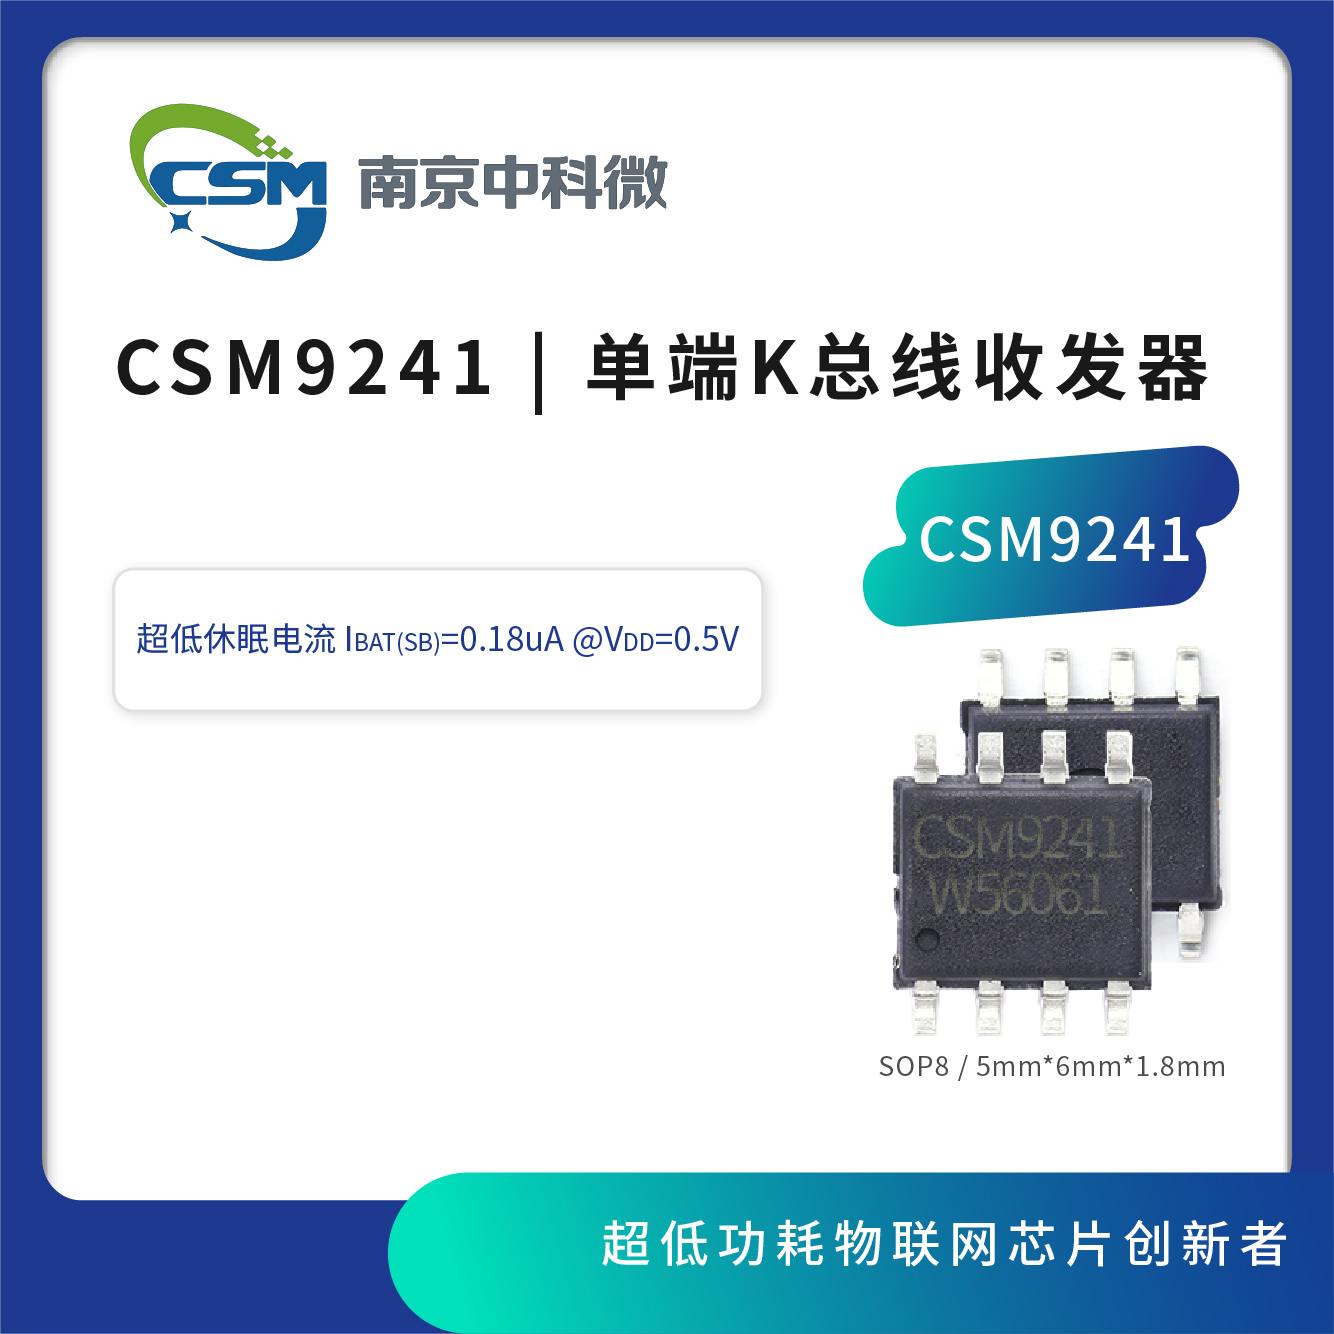 Bus transceiver chip CSM9241